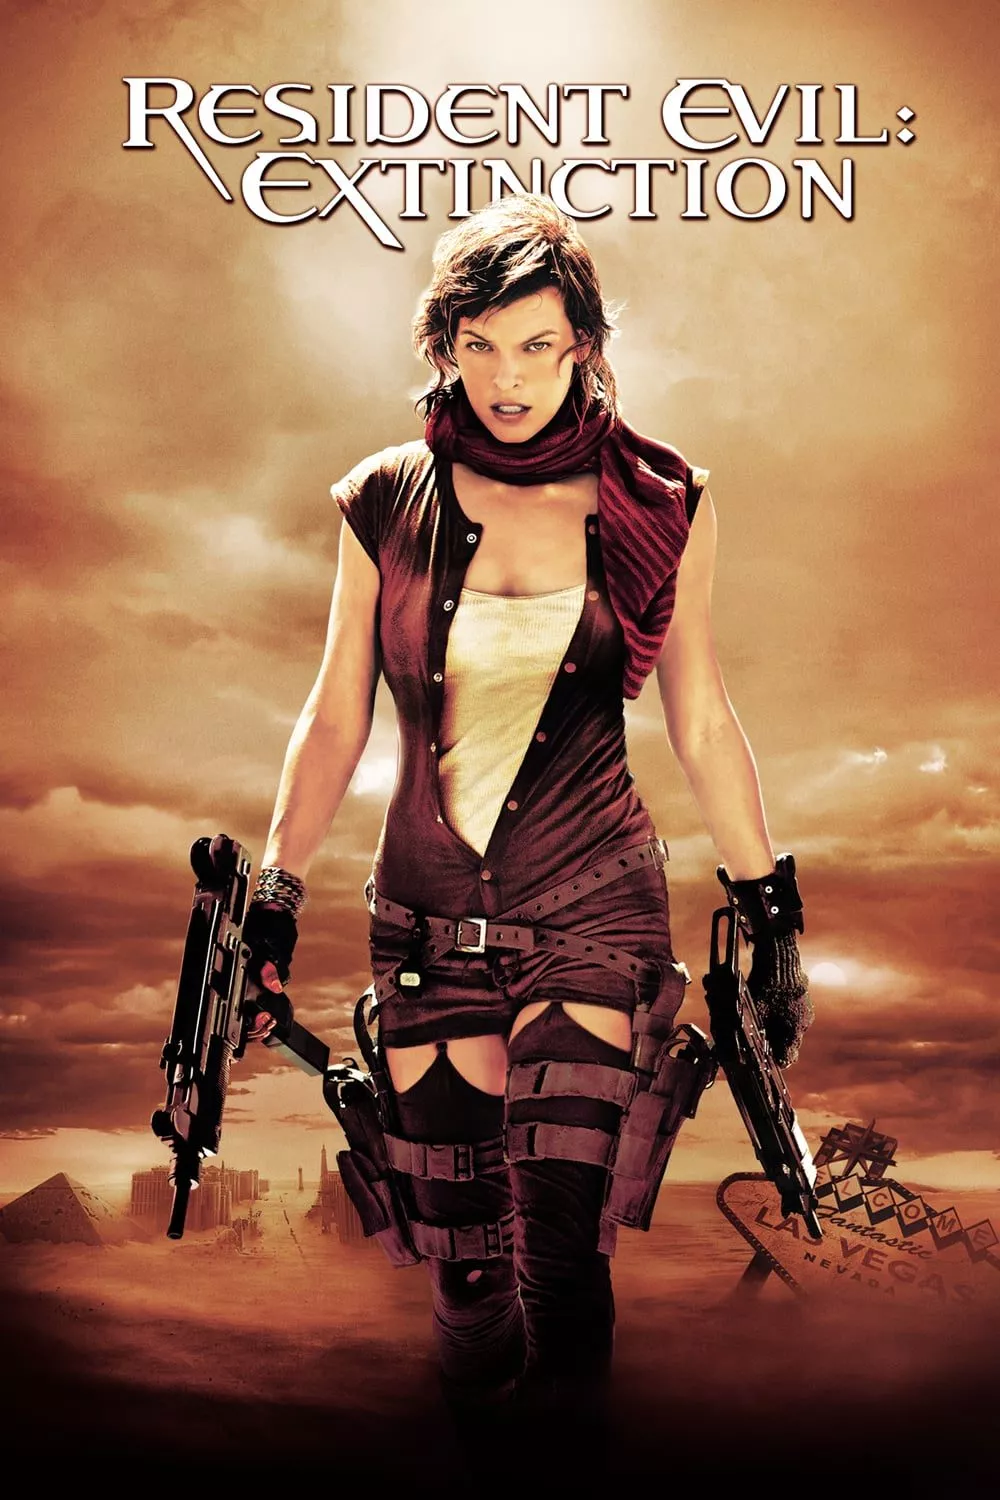 Resident Evil: Extinction (2007) Official Trailer 1 - Milla Jovovich Movie